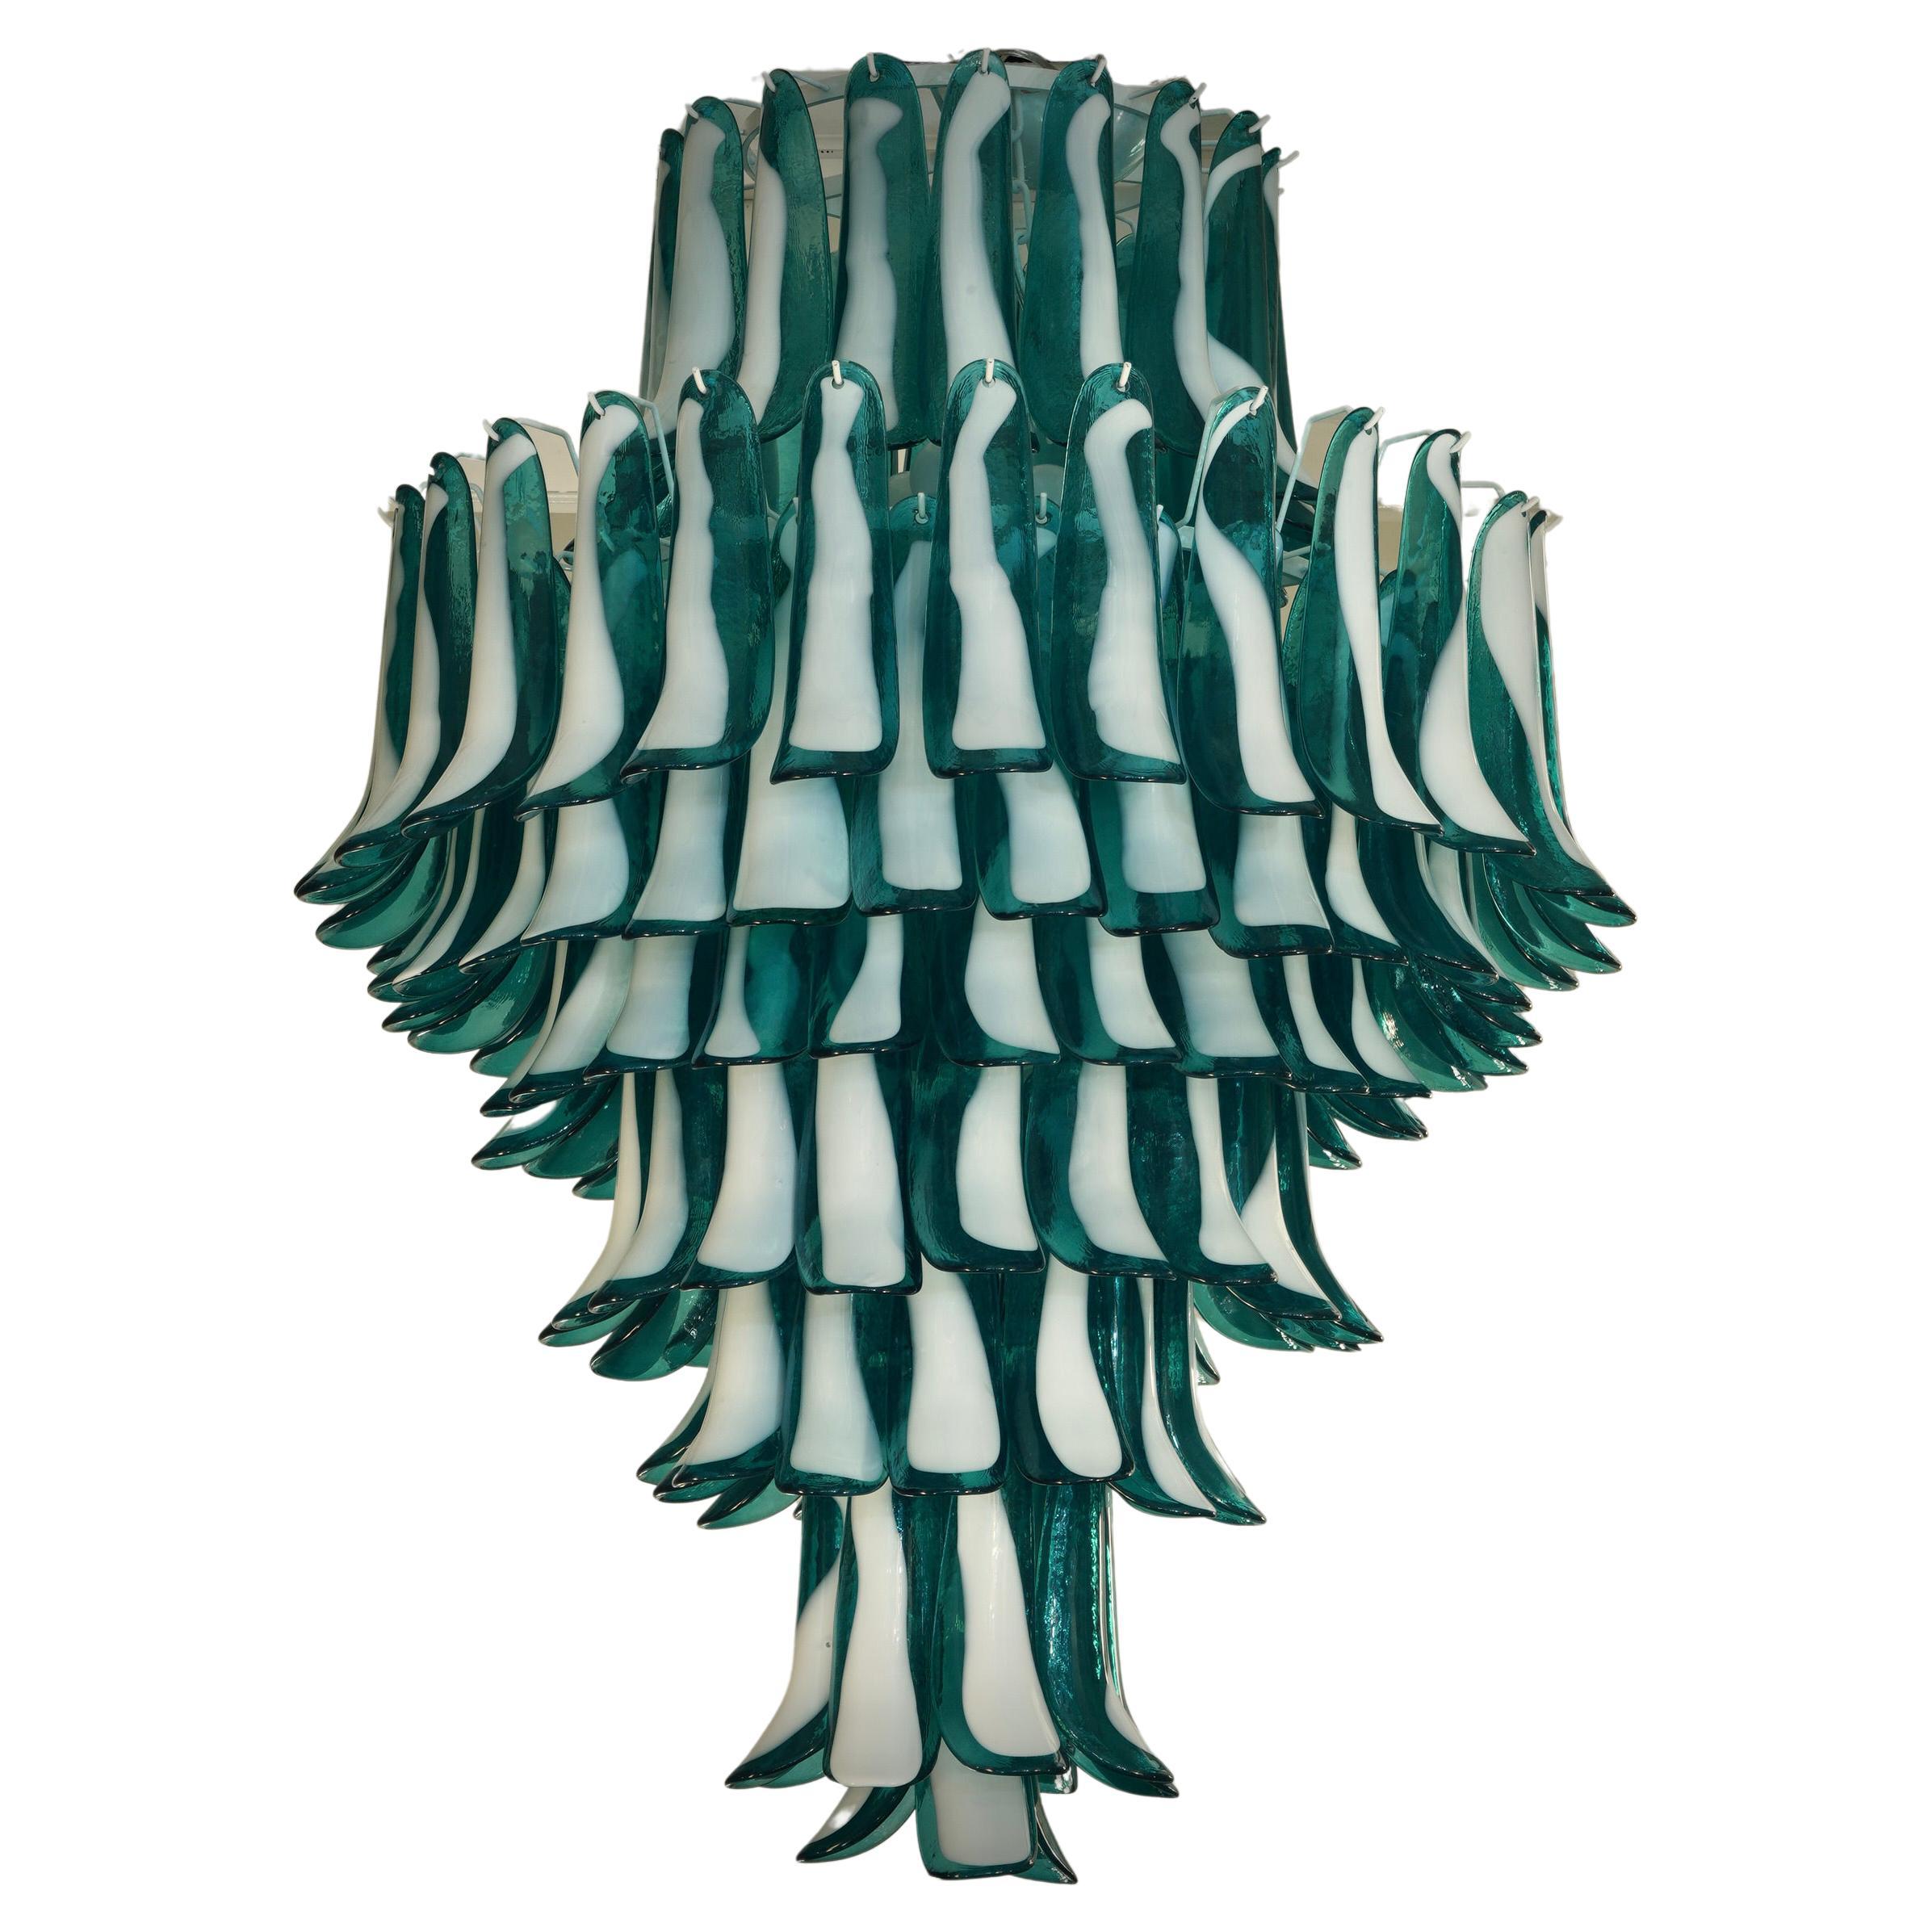 Im Stil der Gruppo Luce für La Murrina Emerald Color Chandelier, dem 2010er